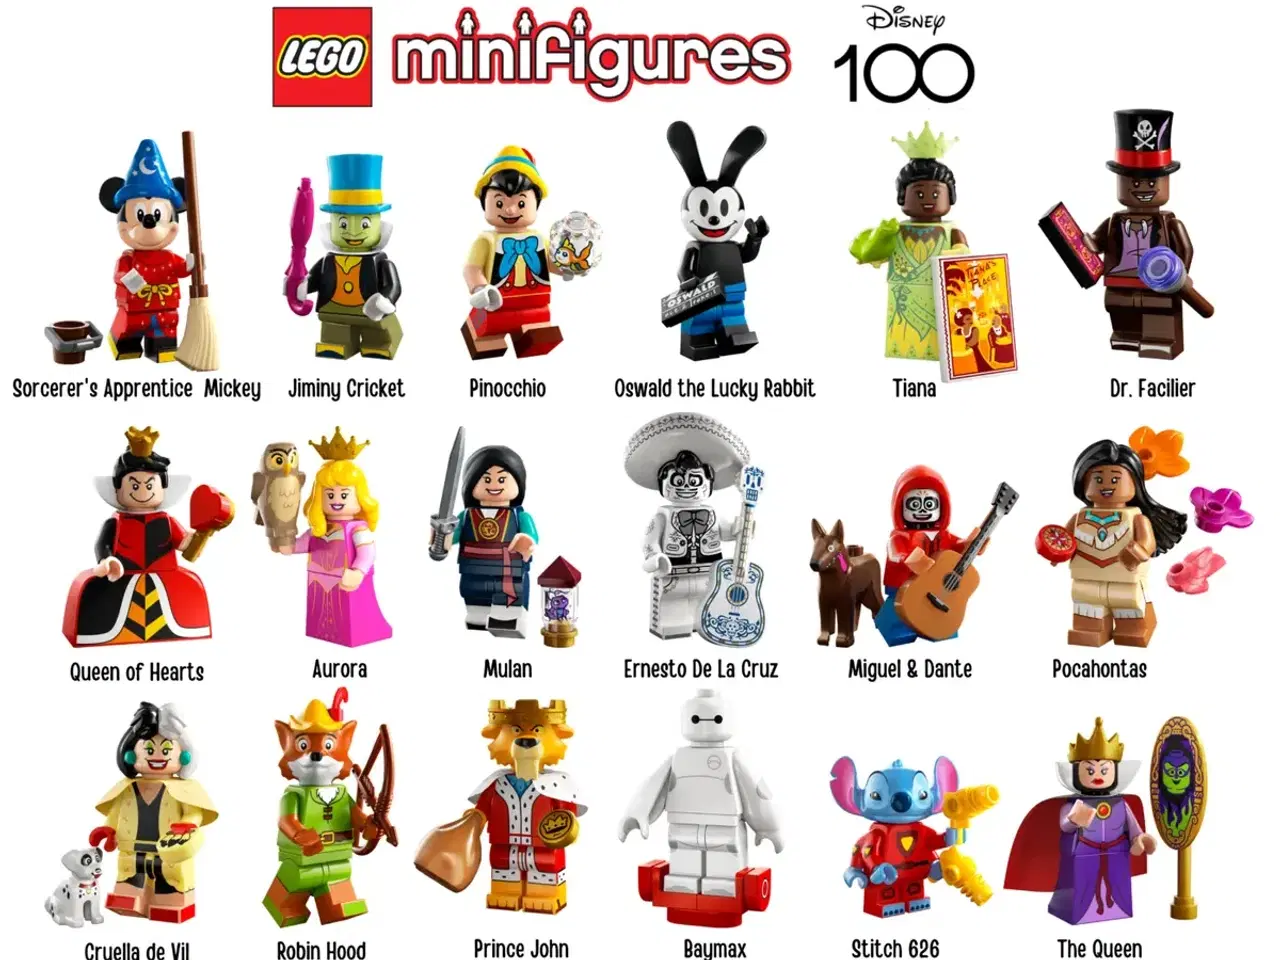 Billede 3 - Prince John - Lego Disney 100 - minifigur